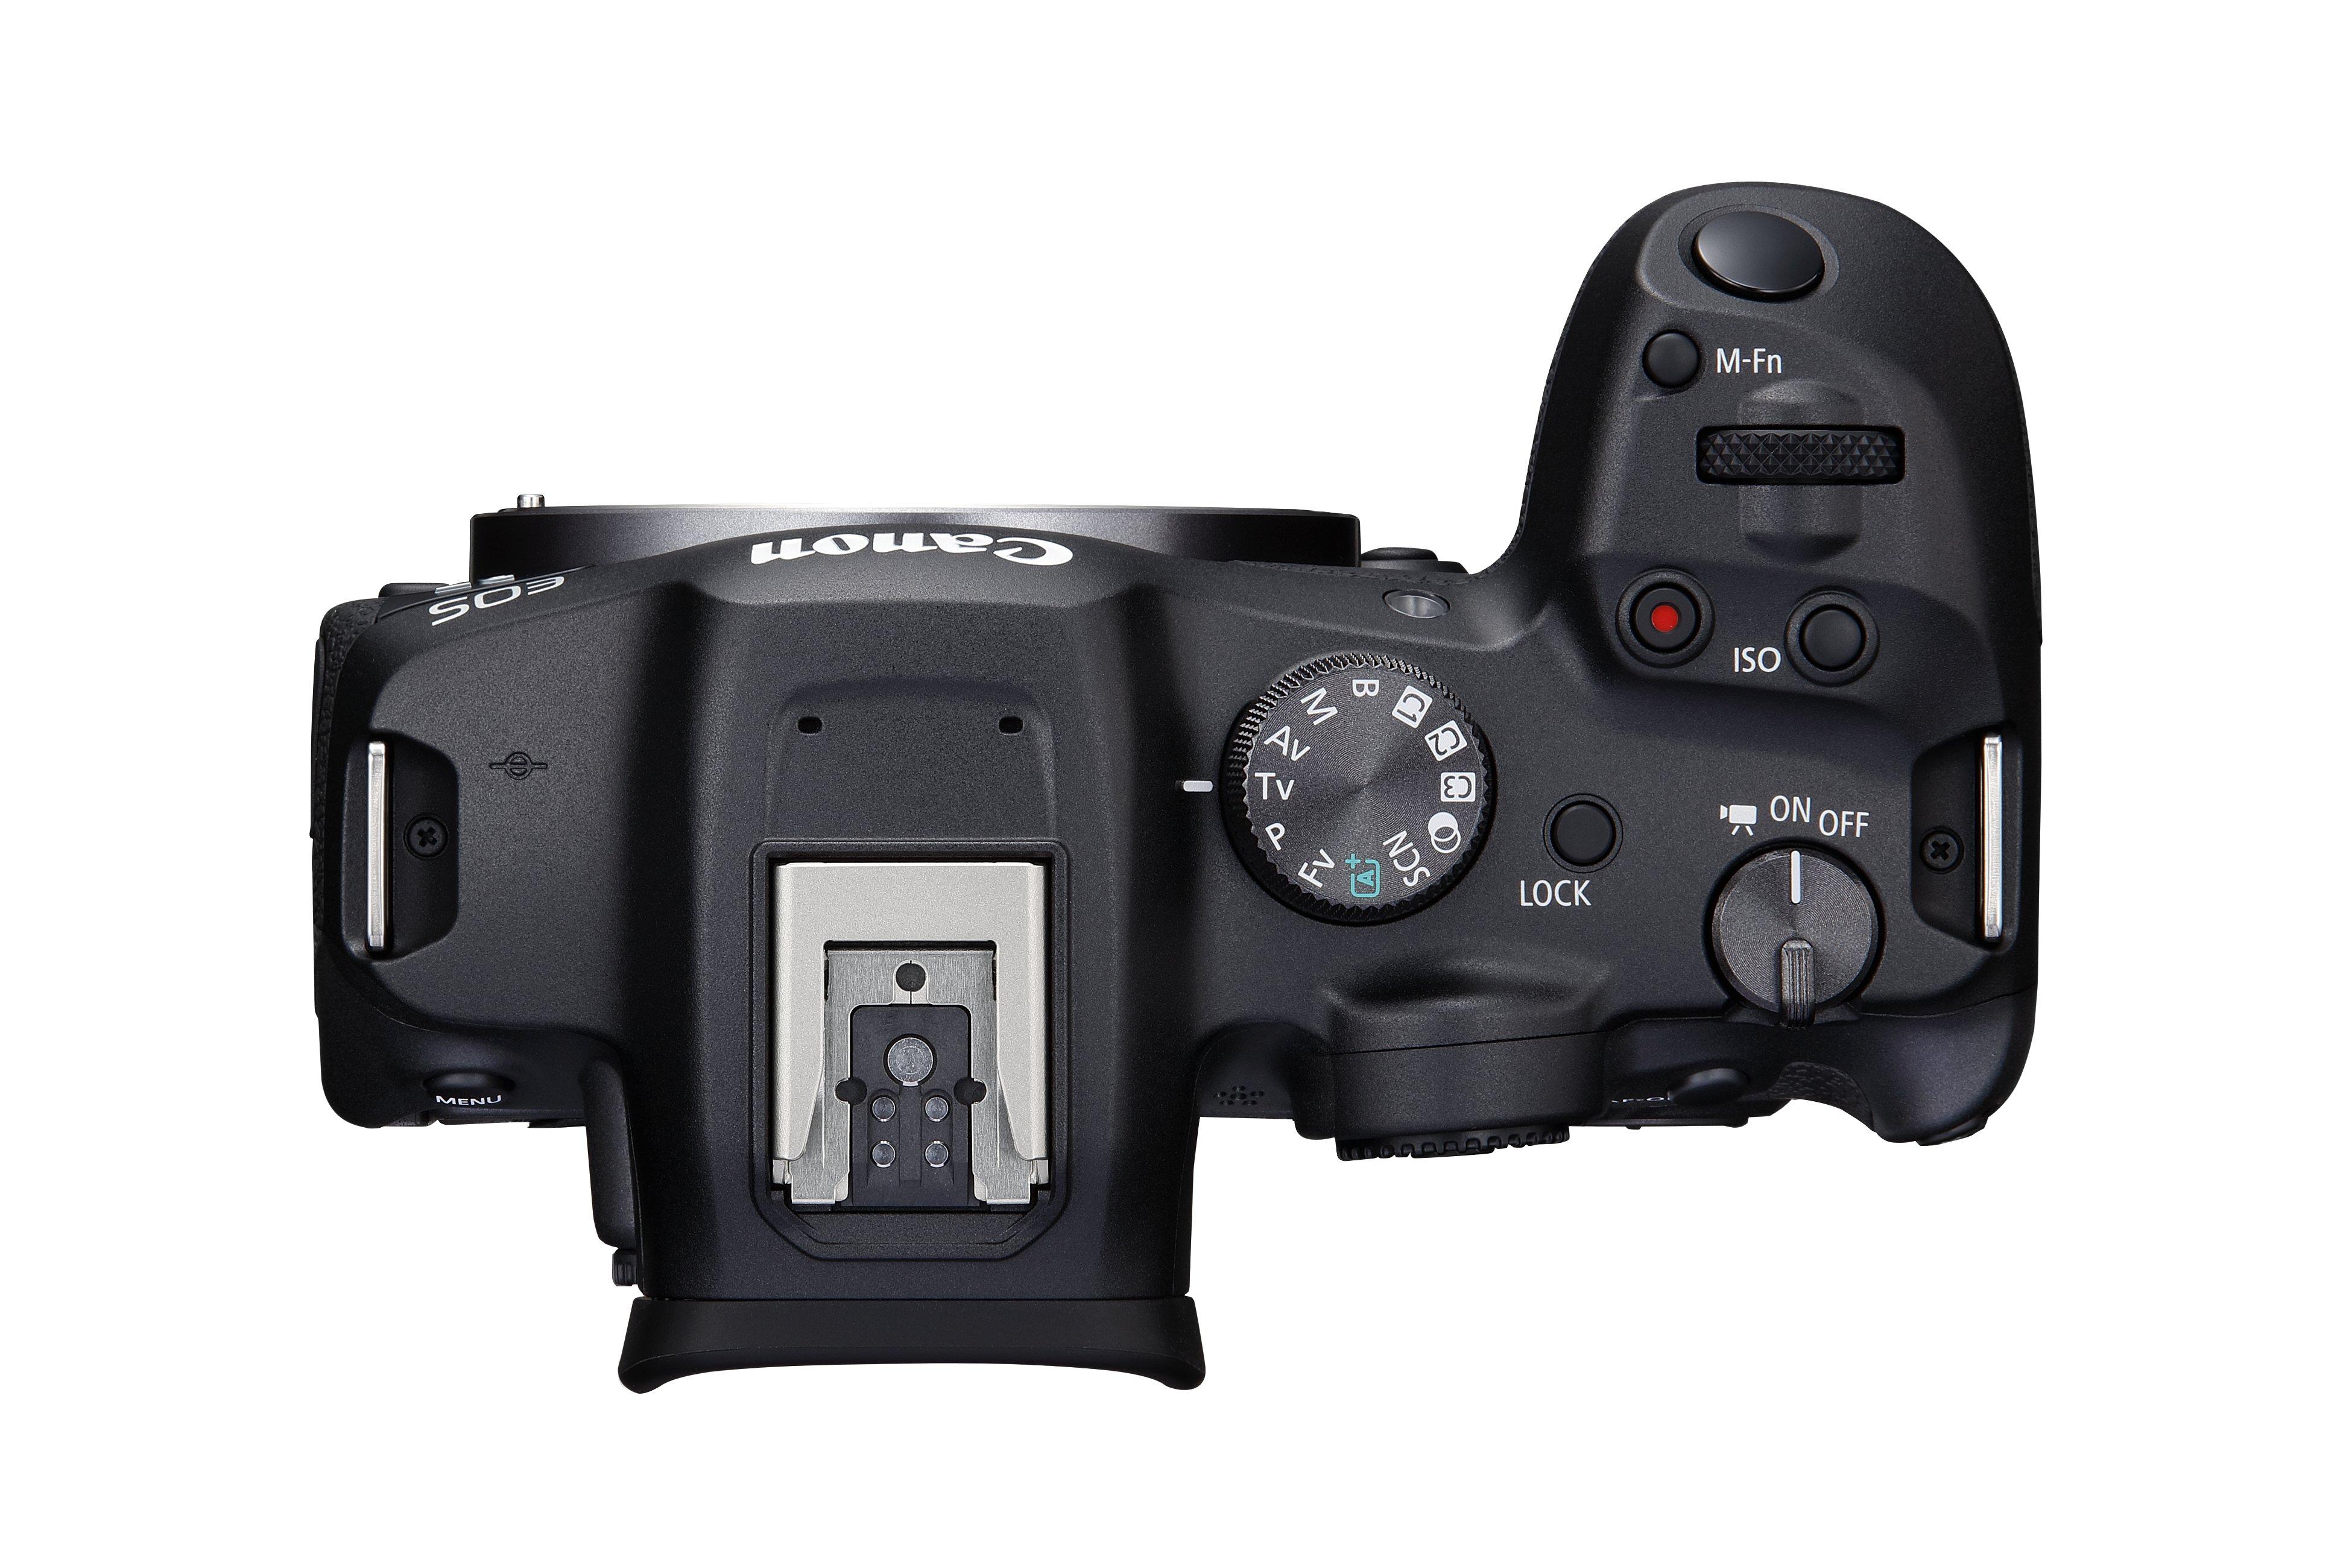 Canon  EOS R7 + EF-EOS R 